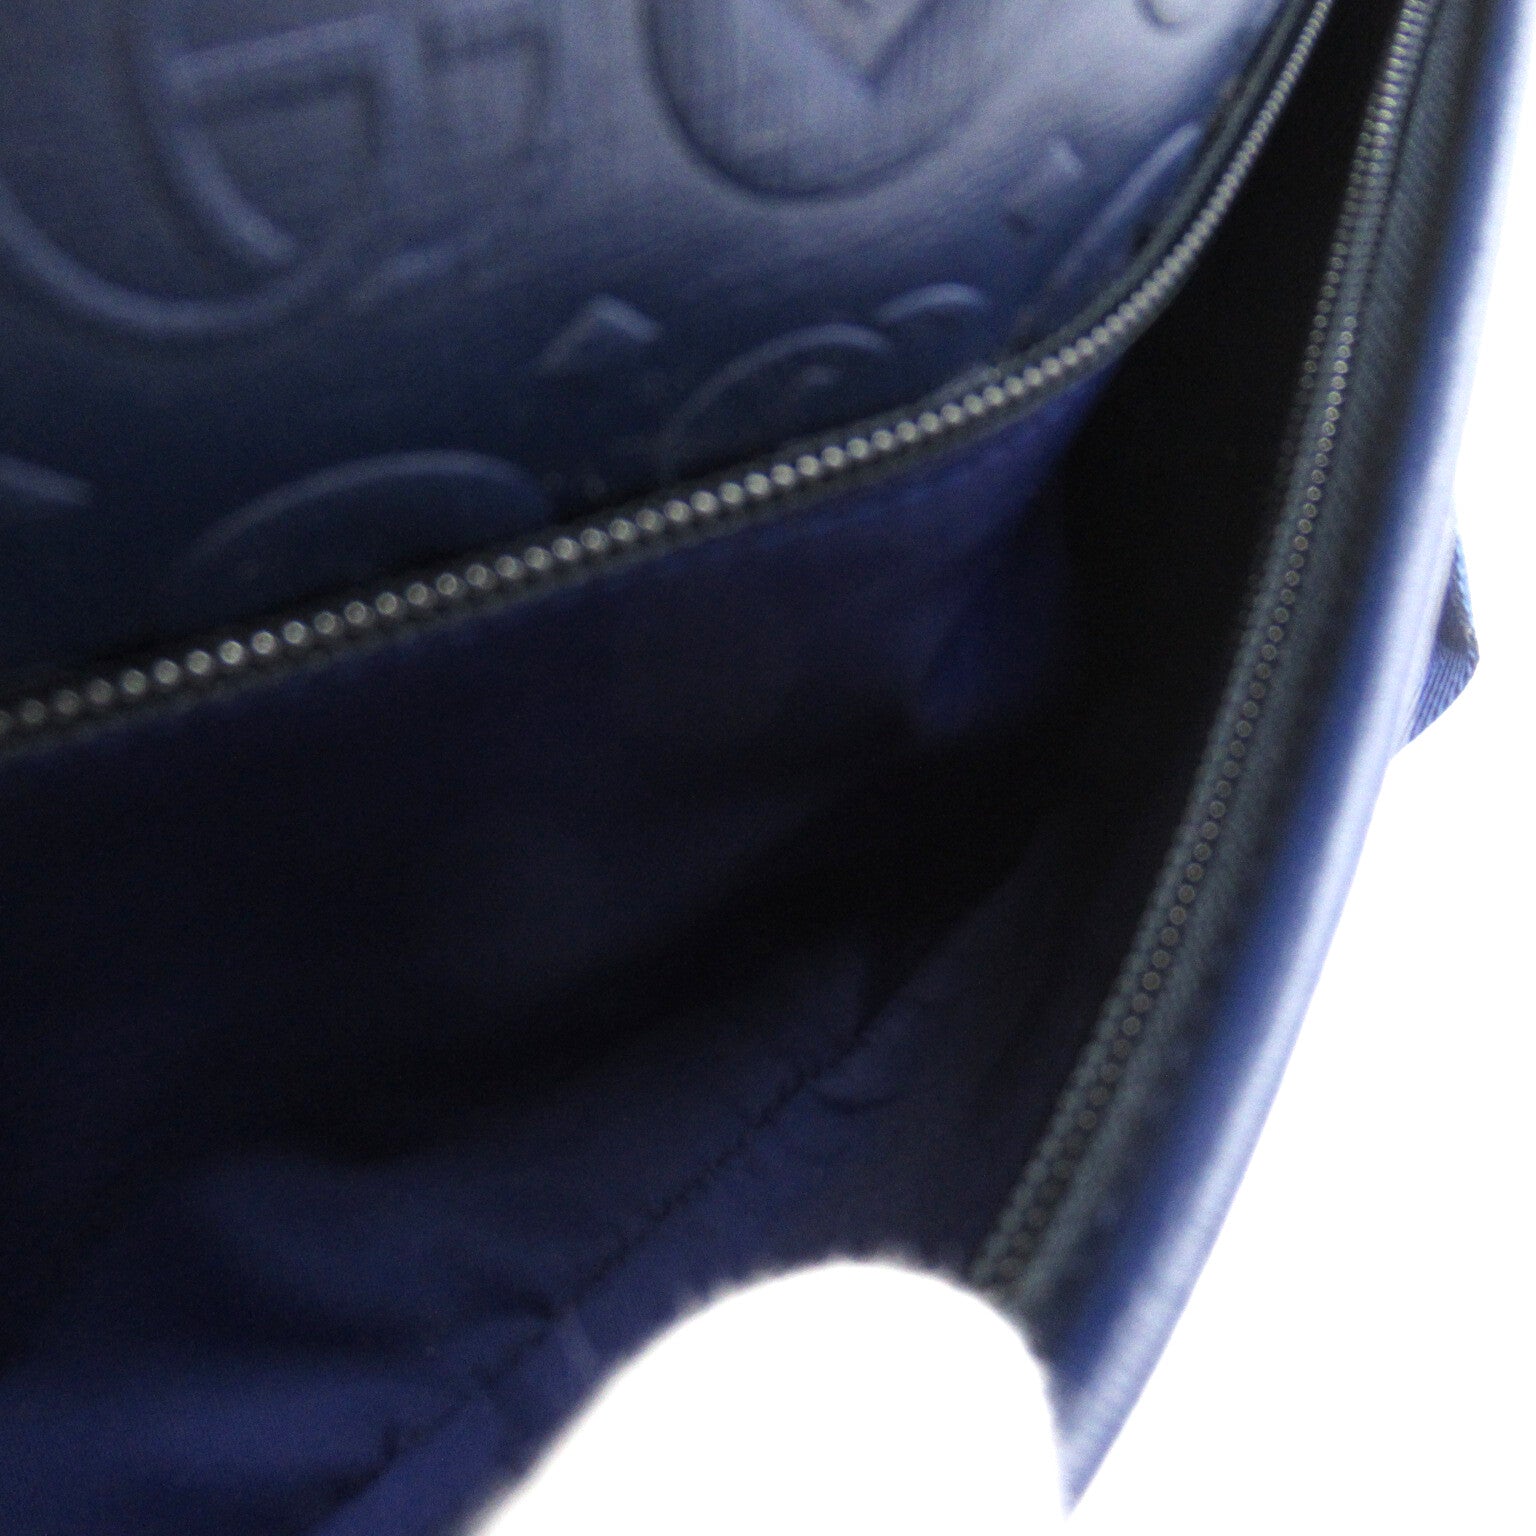 Gucci Kids Backpack Backpack Backpack Bag PVC Coated Canvas Kids Navy 782708FAC4E9771